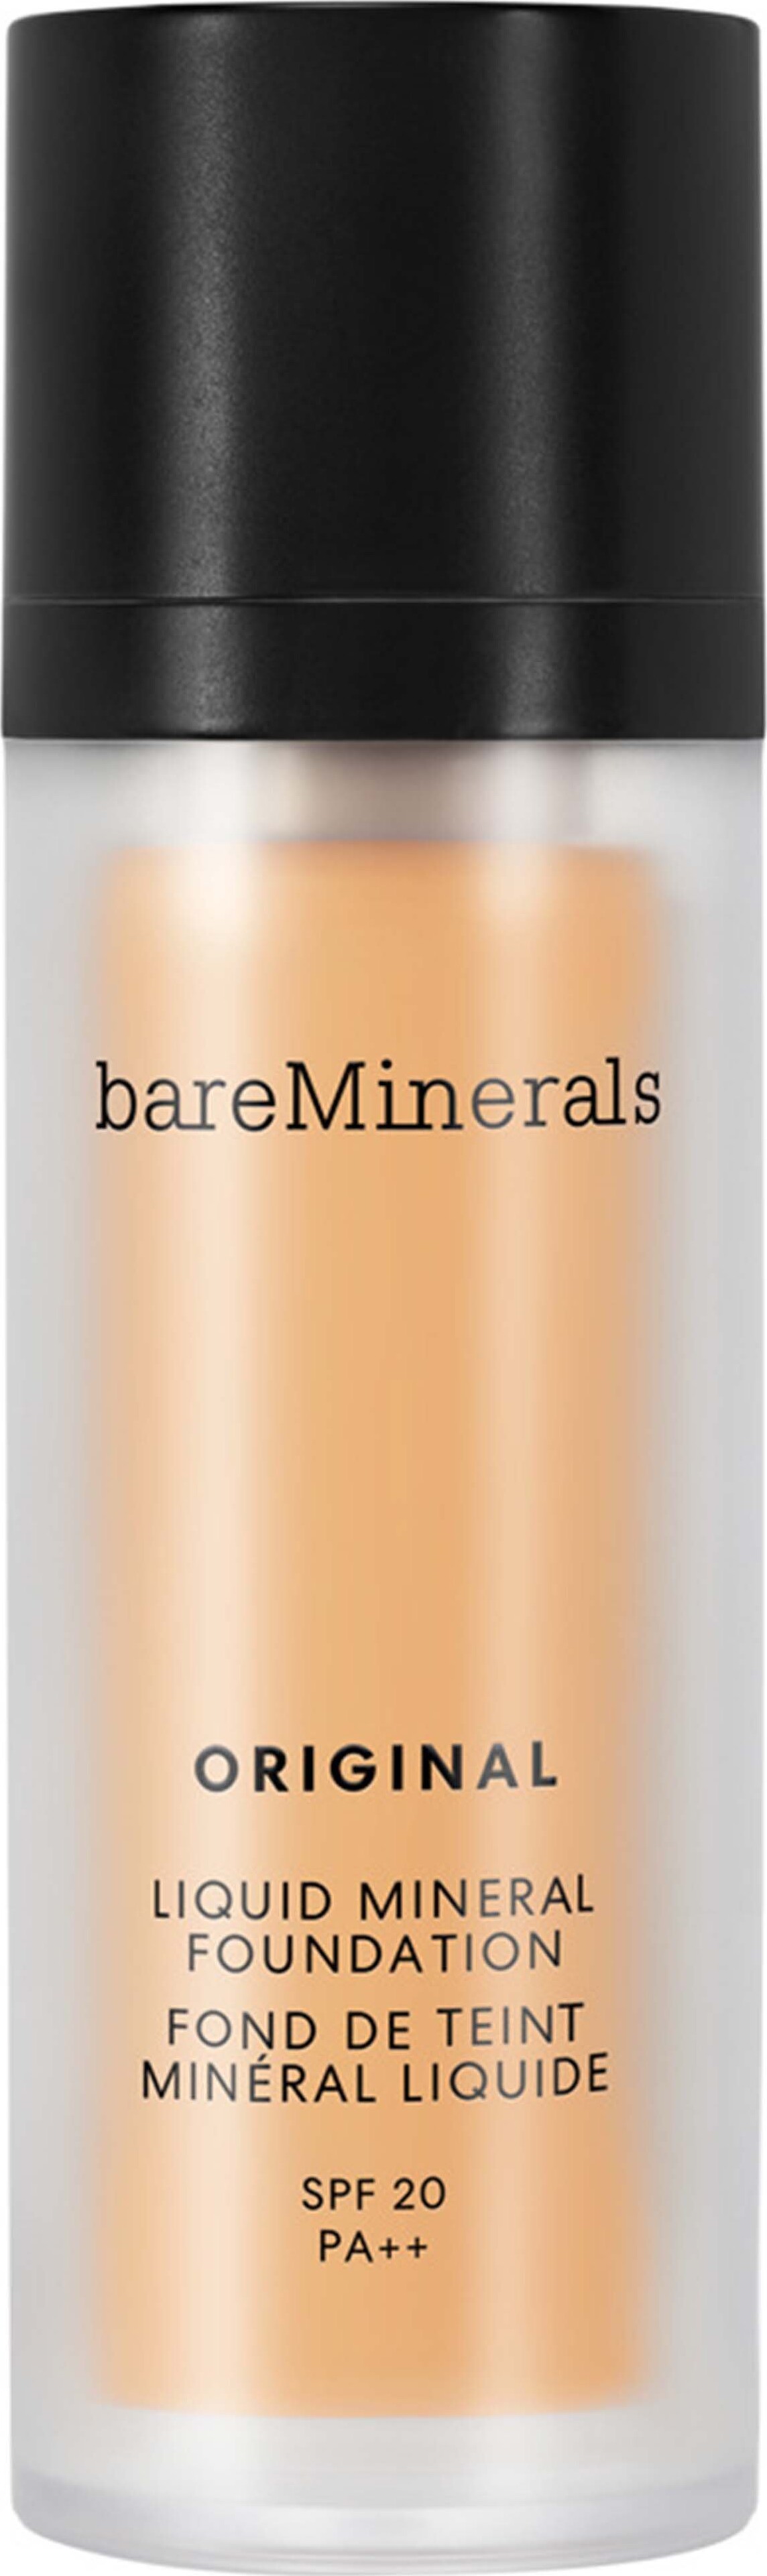 Bareminerals - Original Liquid Mineral Foundation - Tan Nude 17